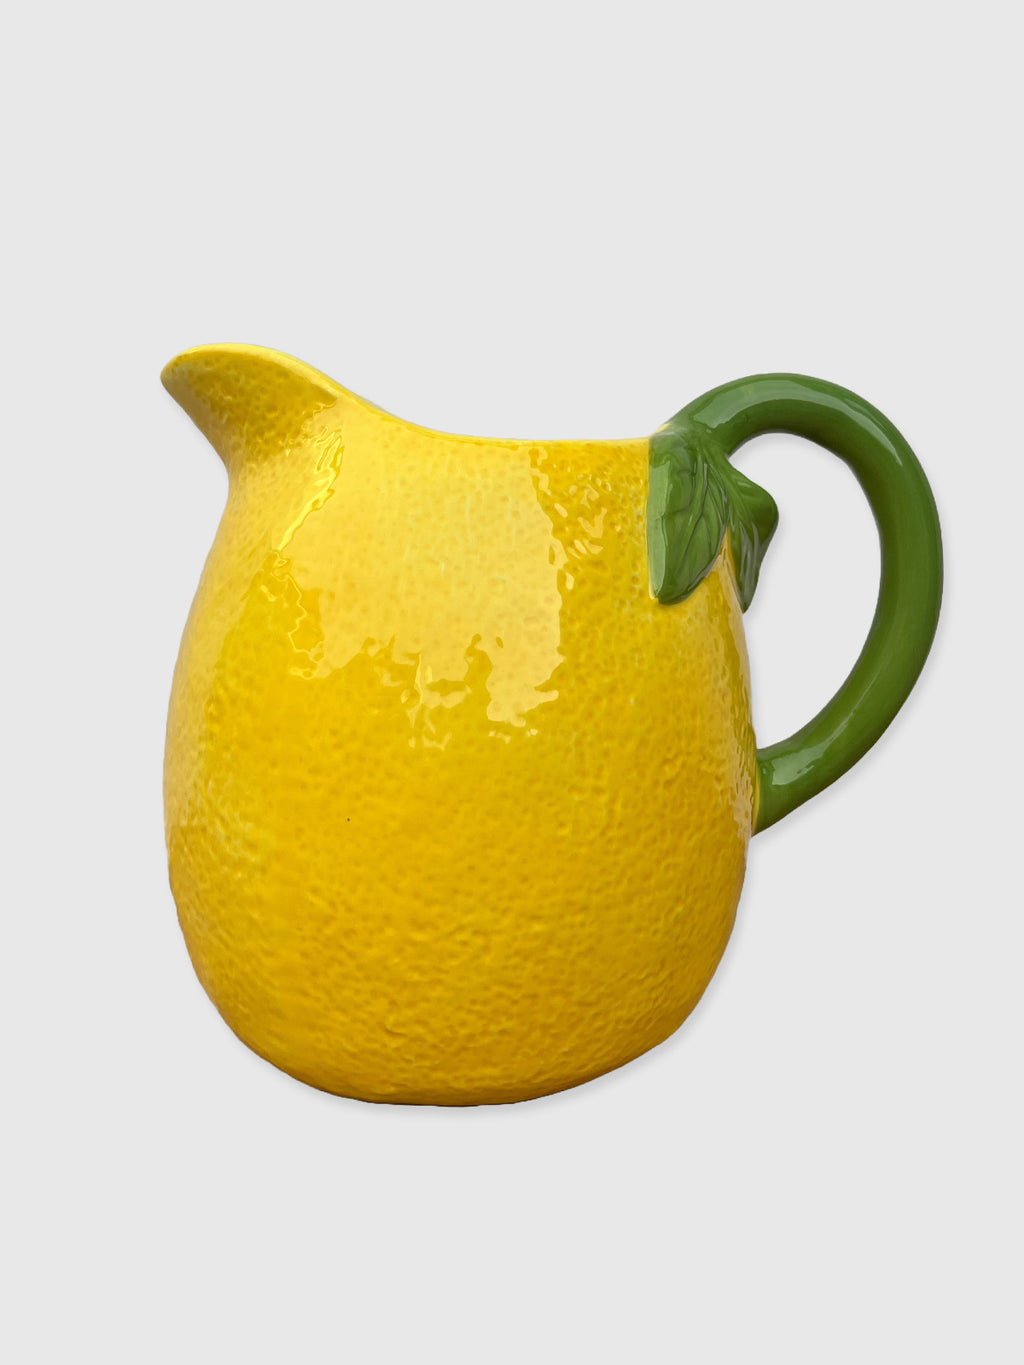 Lemon Shaped Ceramic Pitcher Jug  - 21cm